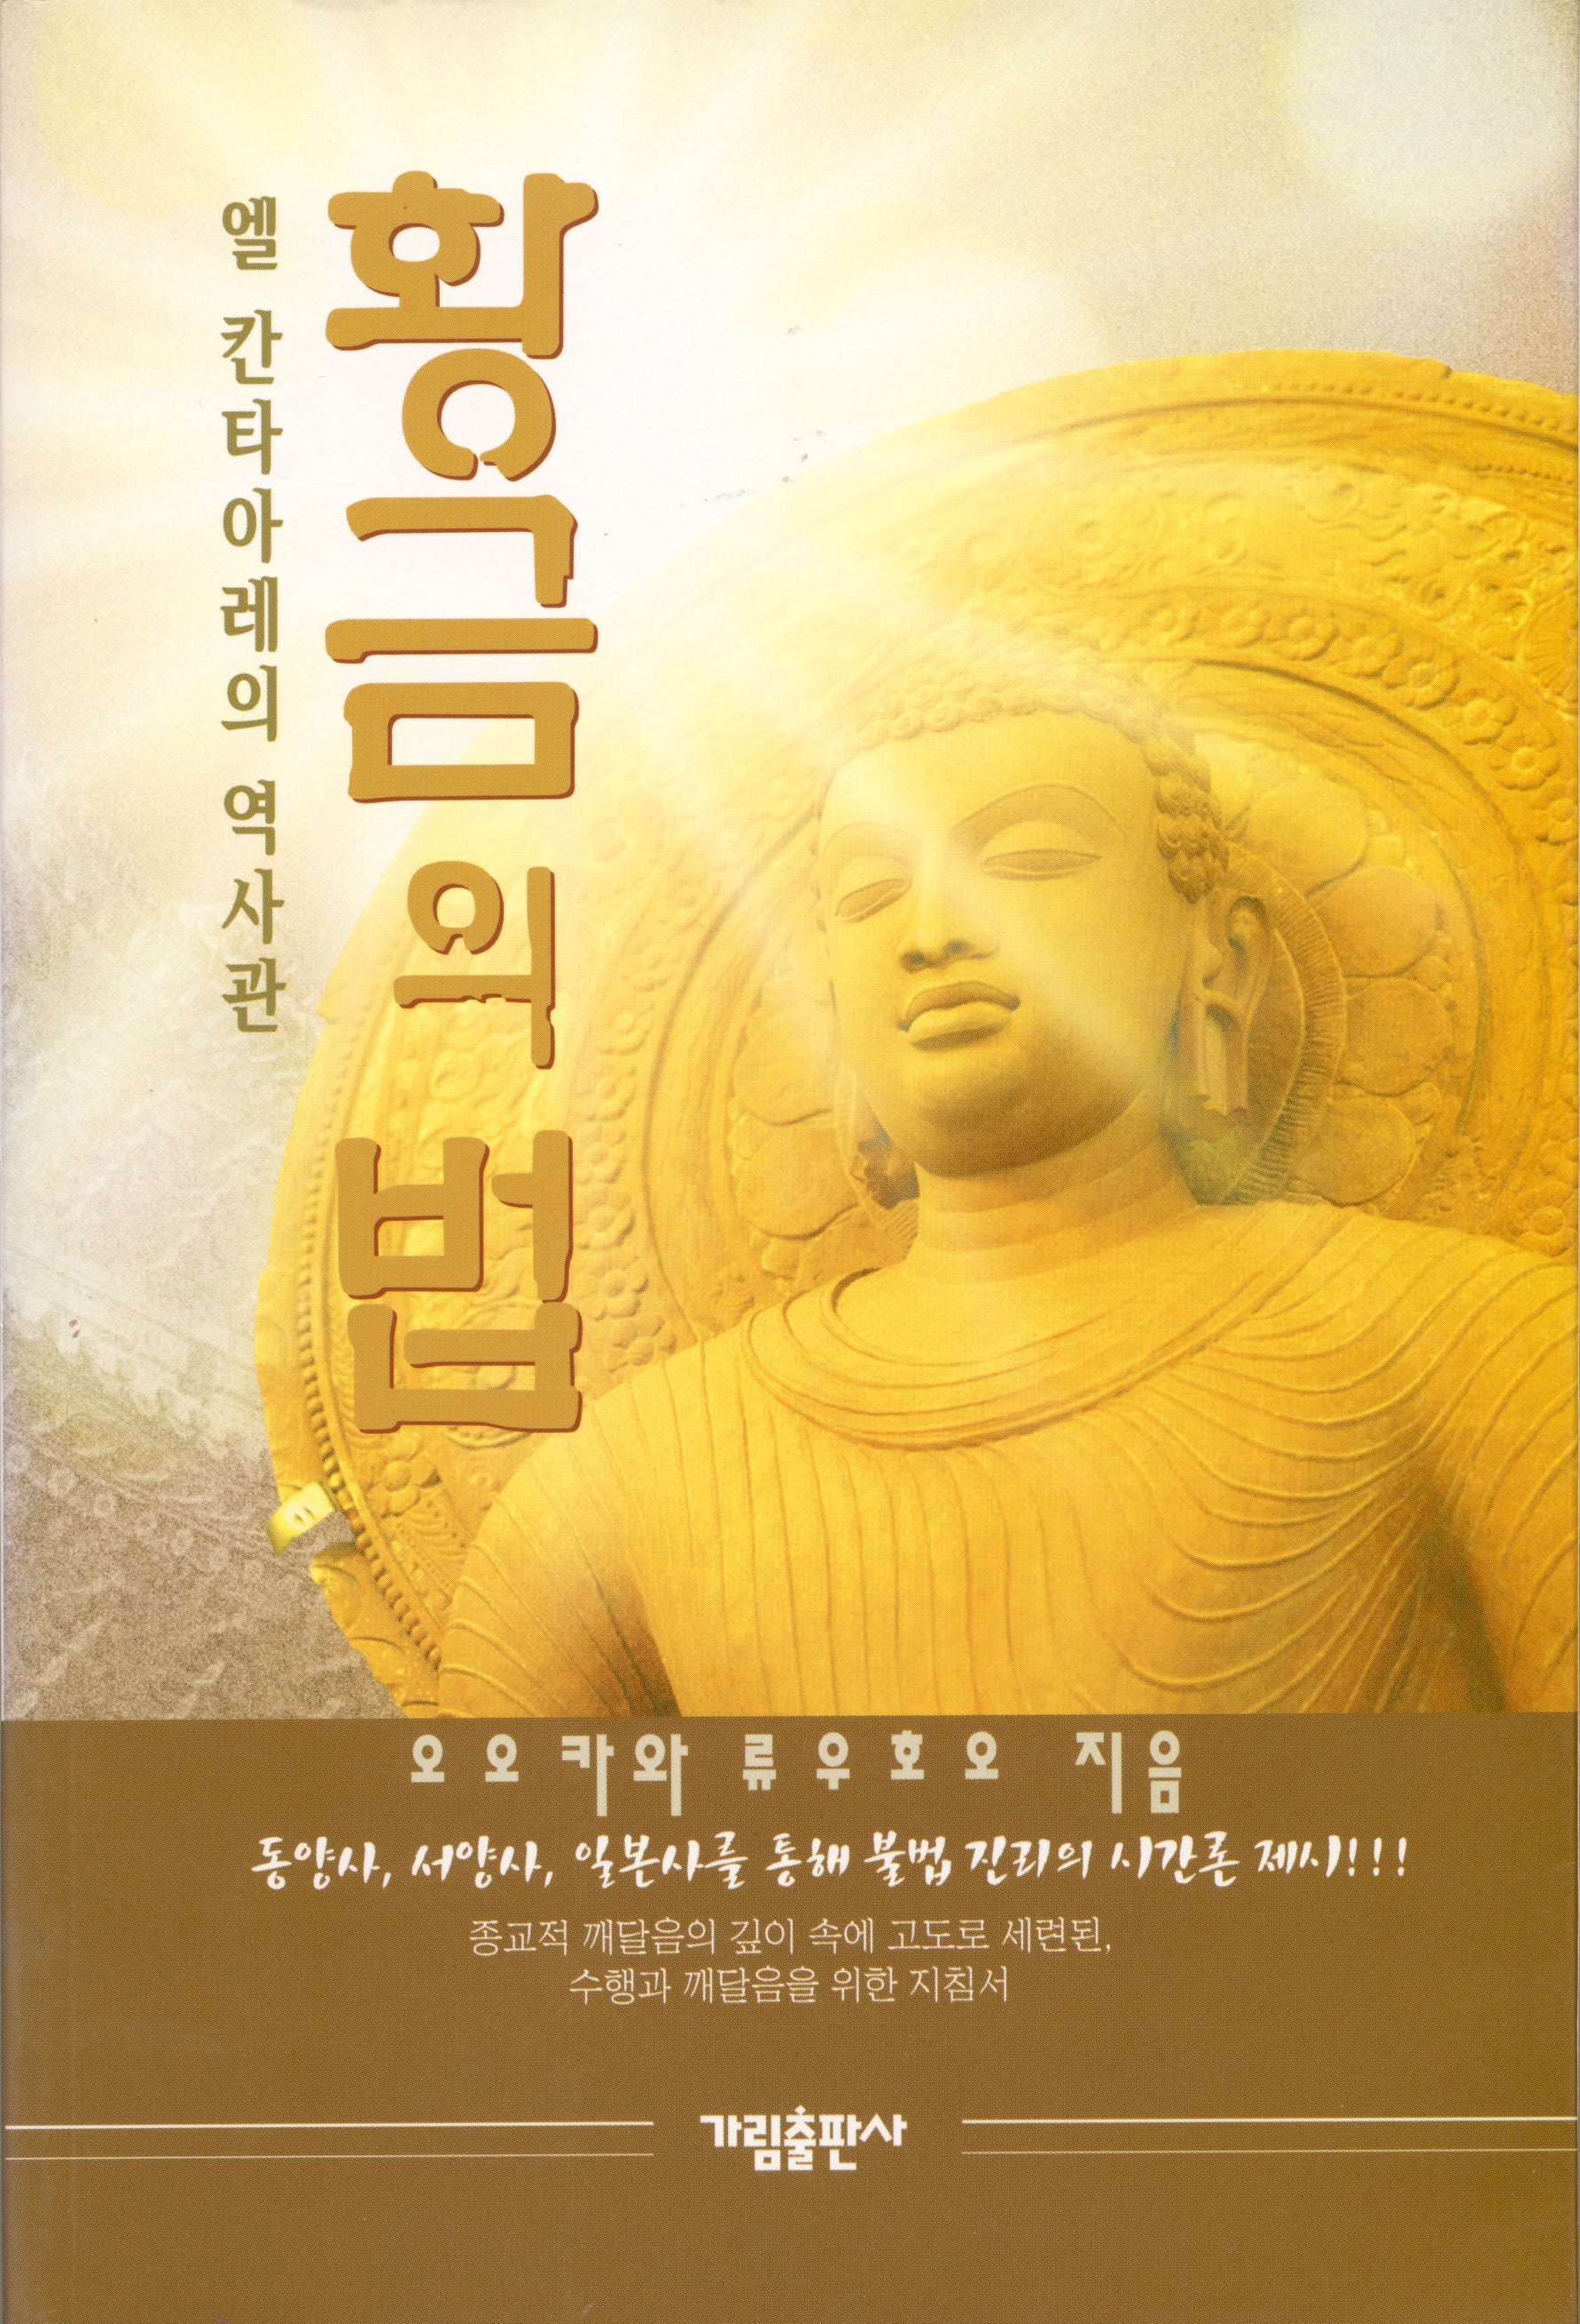 Book, The Golden Laws : History through the Eyes of the Eternal Buddha, Ryuho Okawa, Korean - IRH Press International